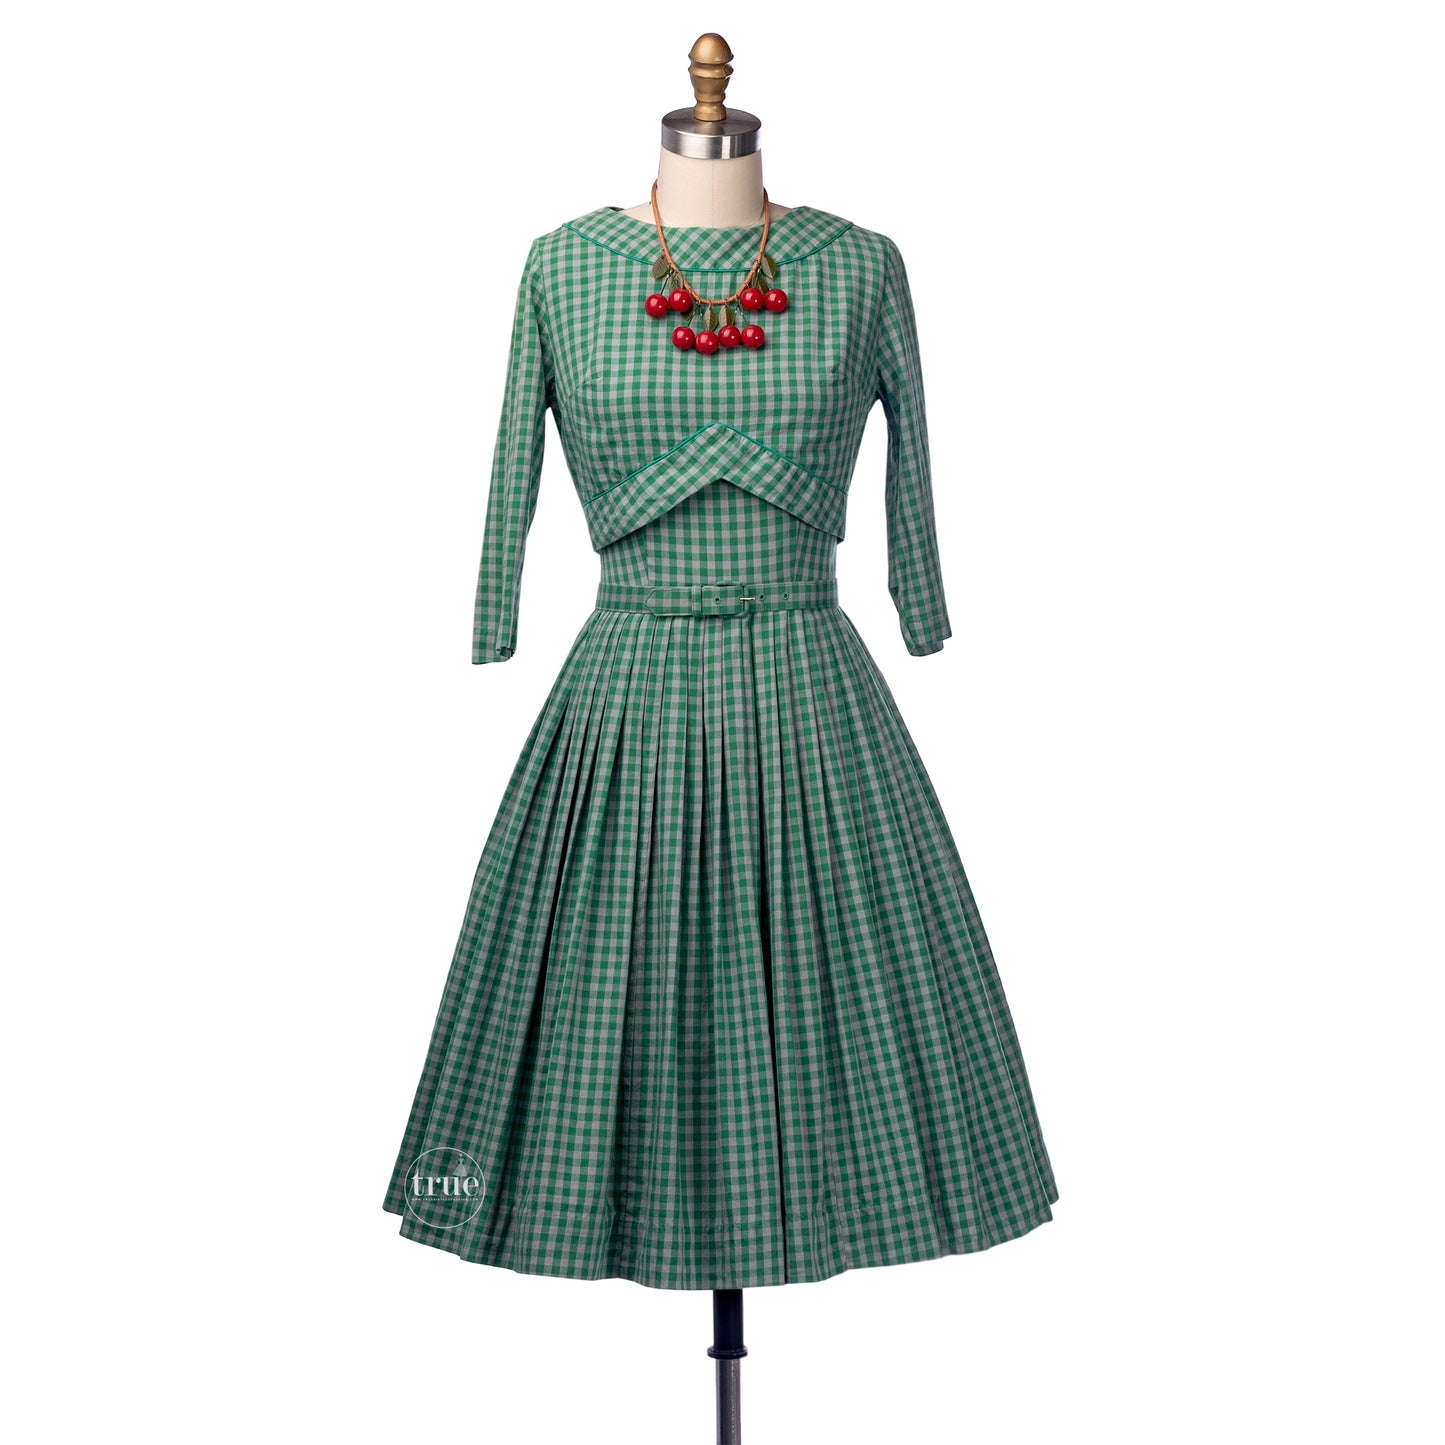 vintage 1950's dress ...fab Carol Brent green gingham full skirt dress & jacket